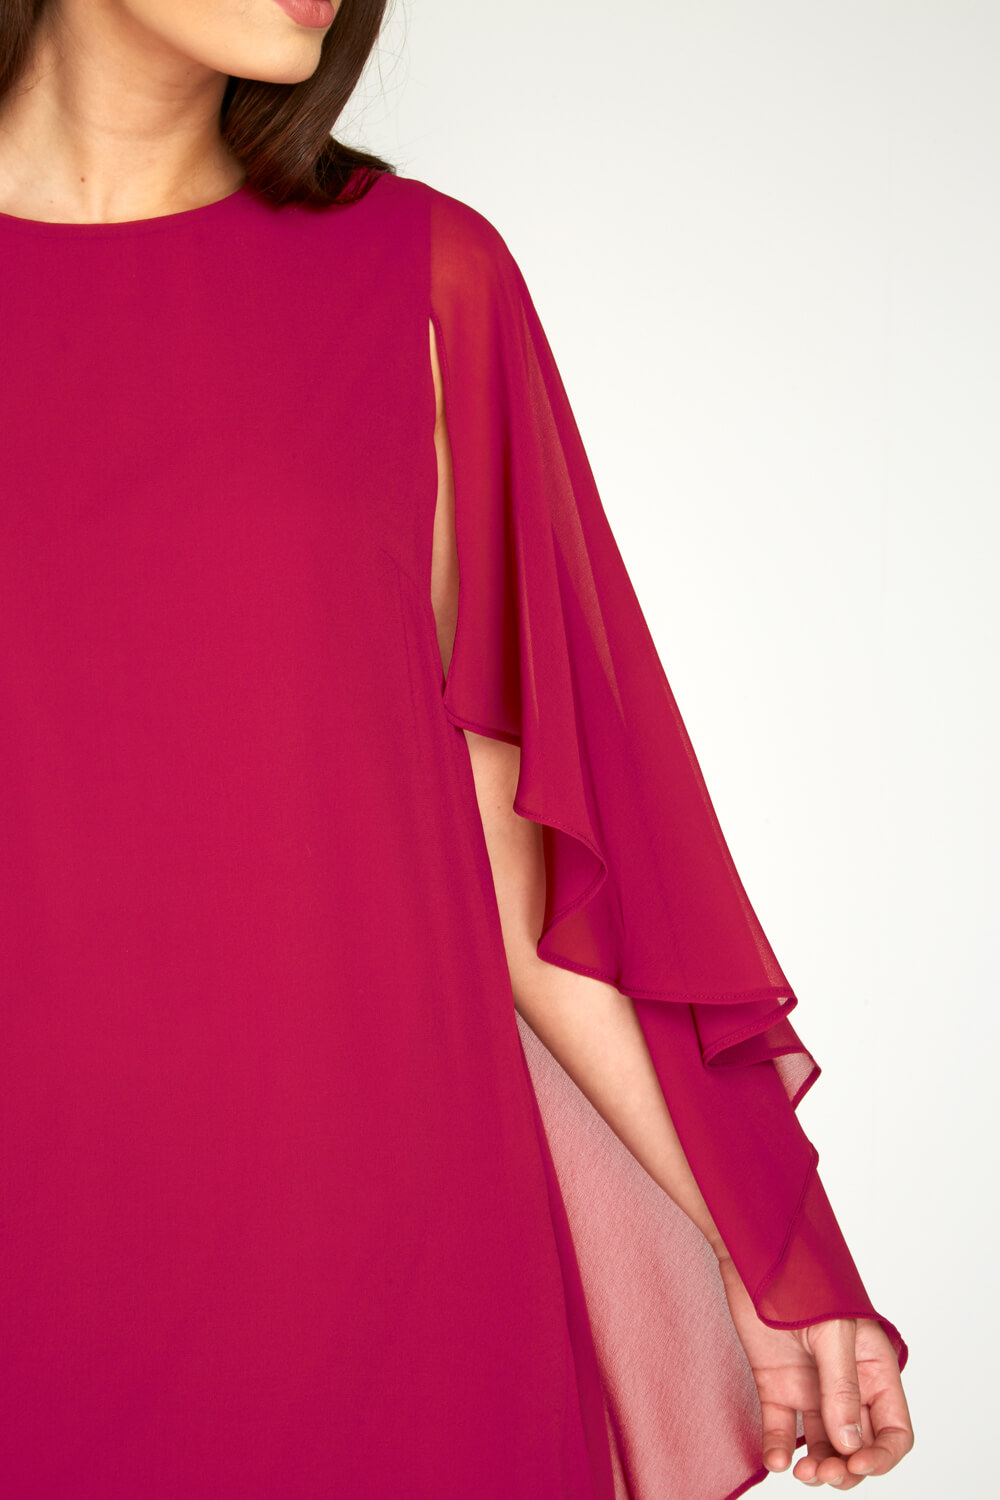 MAGENTA Chiffon Cape Sleeve Dress, Image 3 of 4